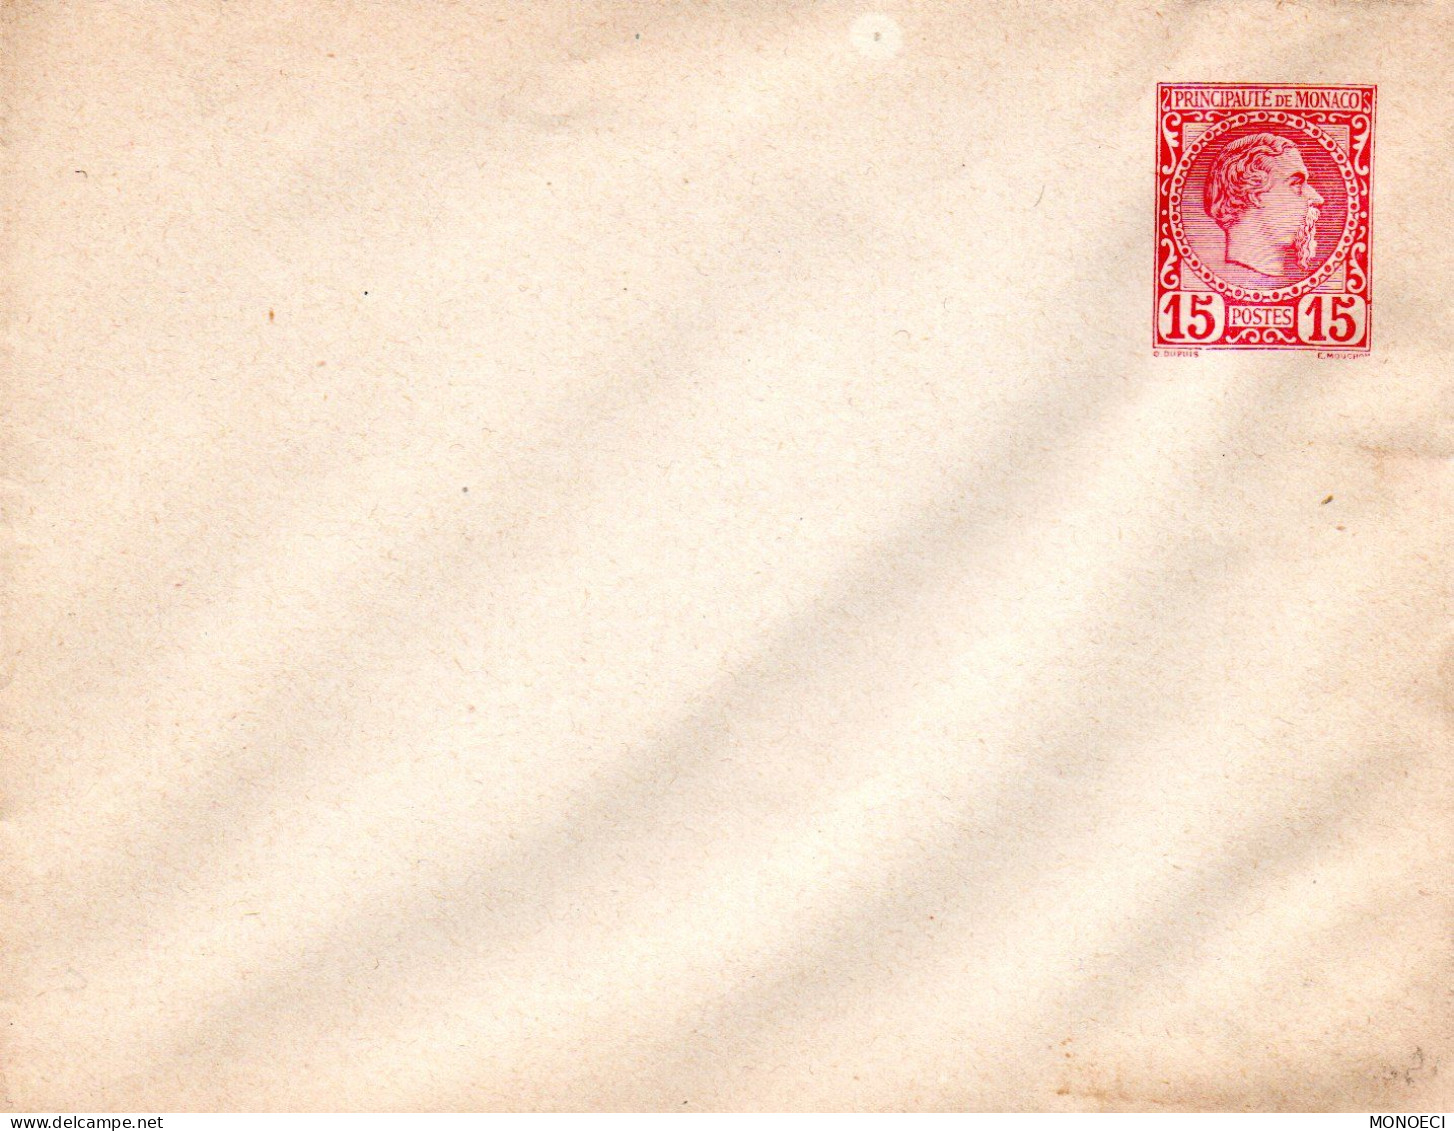 MONACO -- MONTE CARLO -- ENTIER POSTAL -- Enveloppe -- 15 C. (1886) (123 X 96) Prince Charles III - Ganzsachen